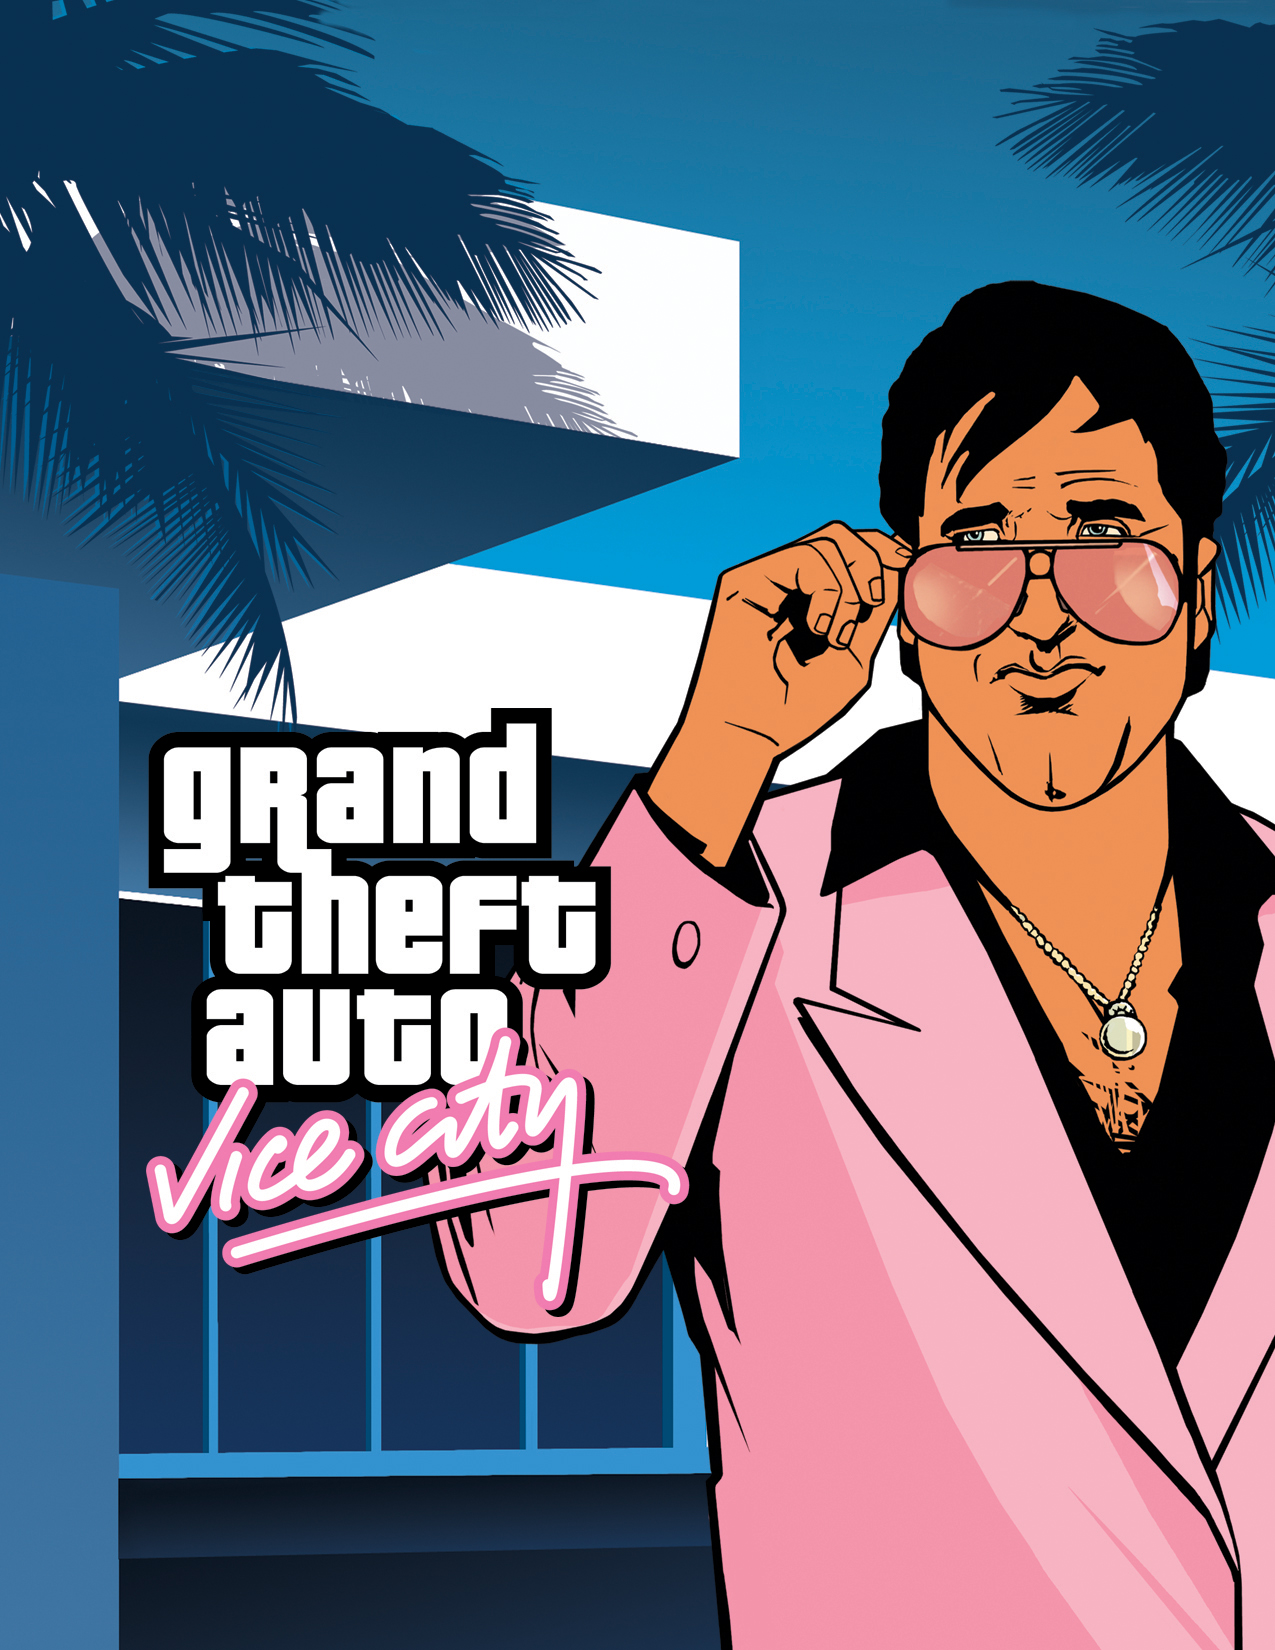 Grand Theft Auto Vice City. 